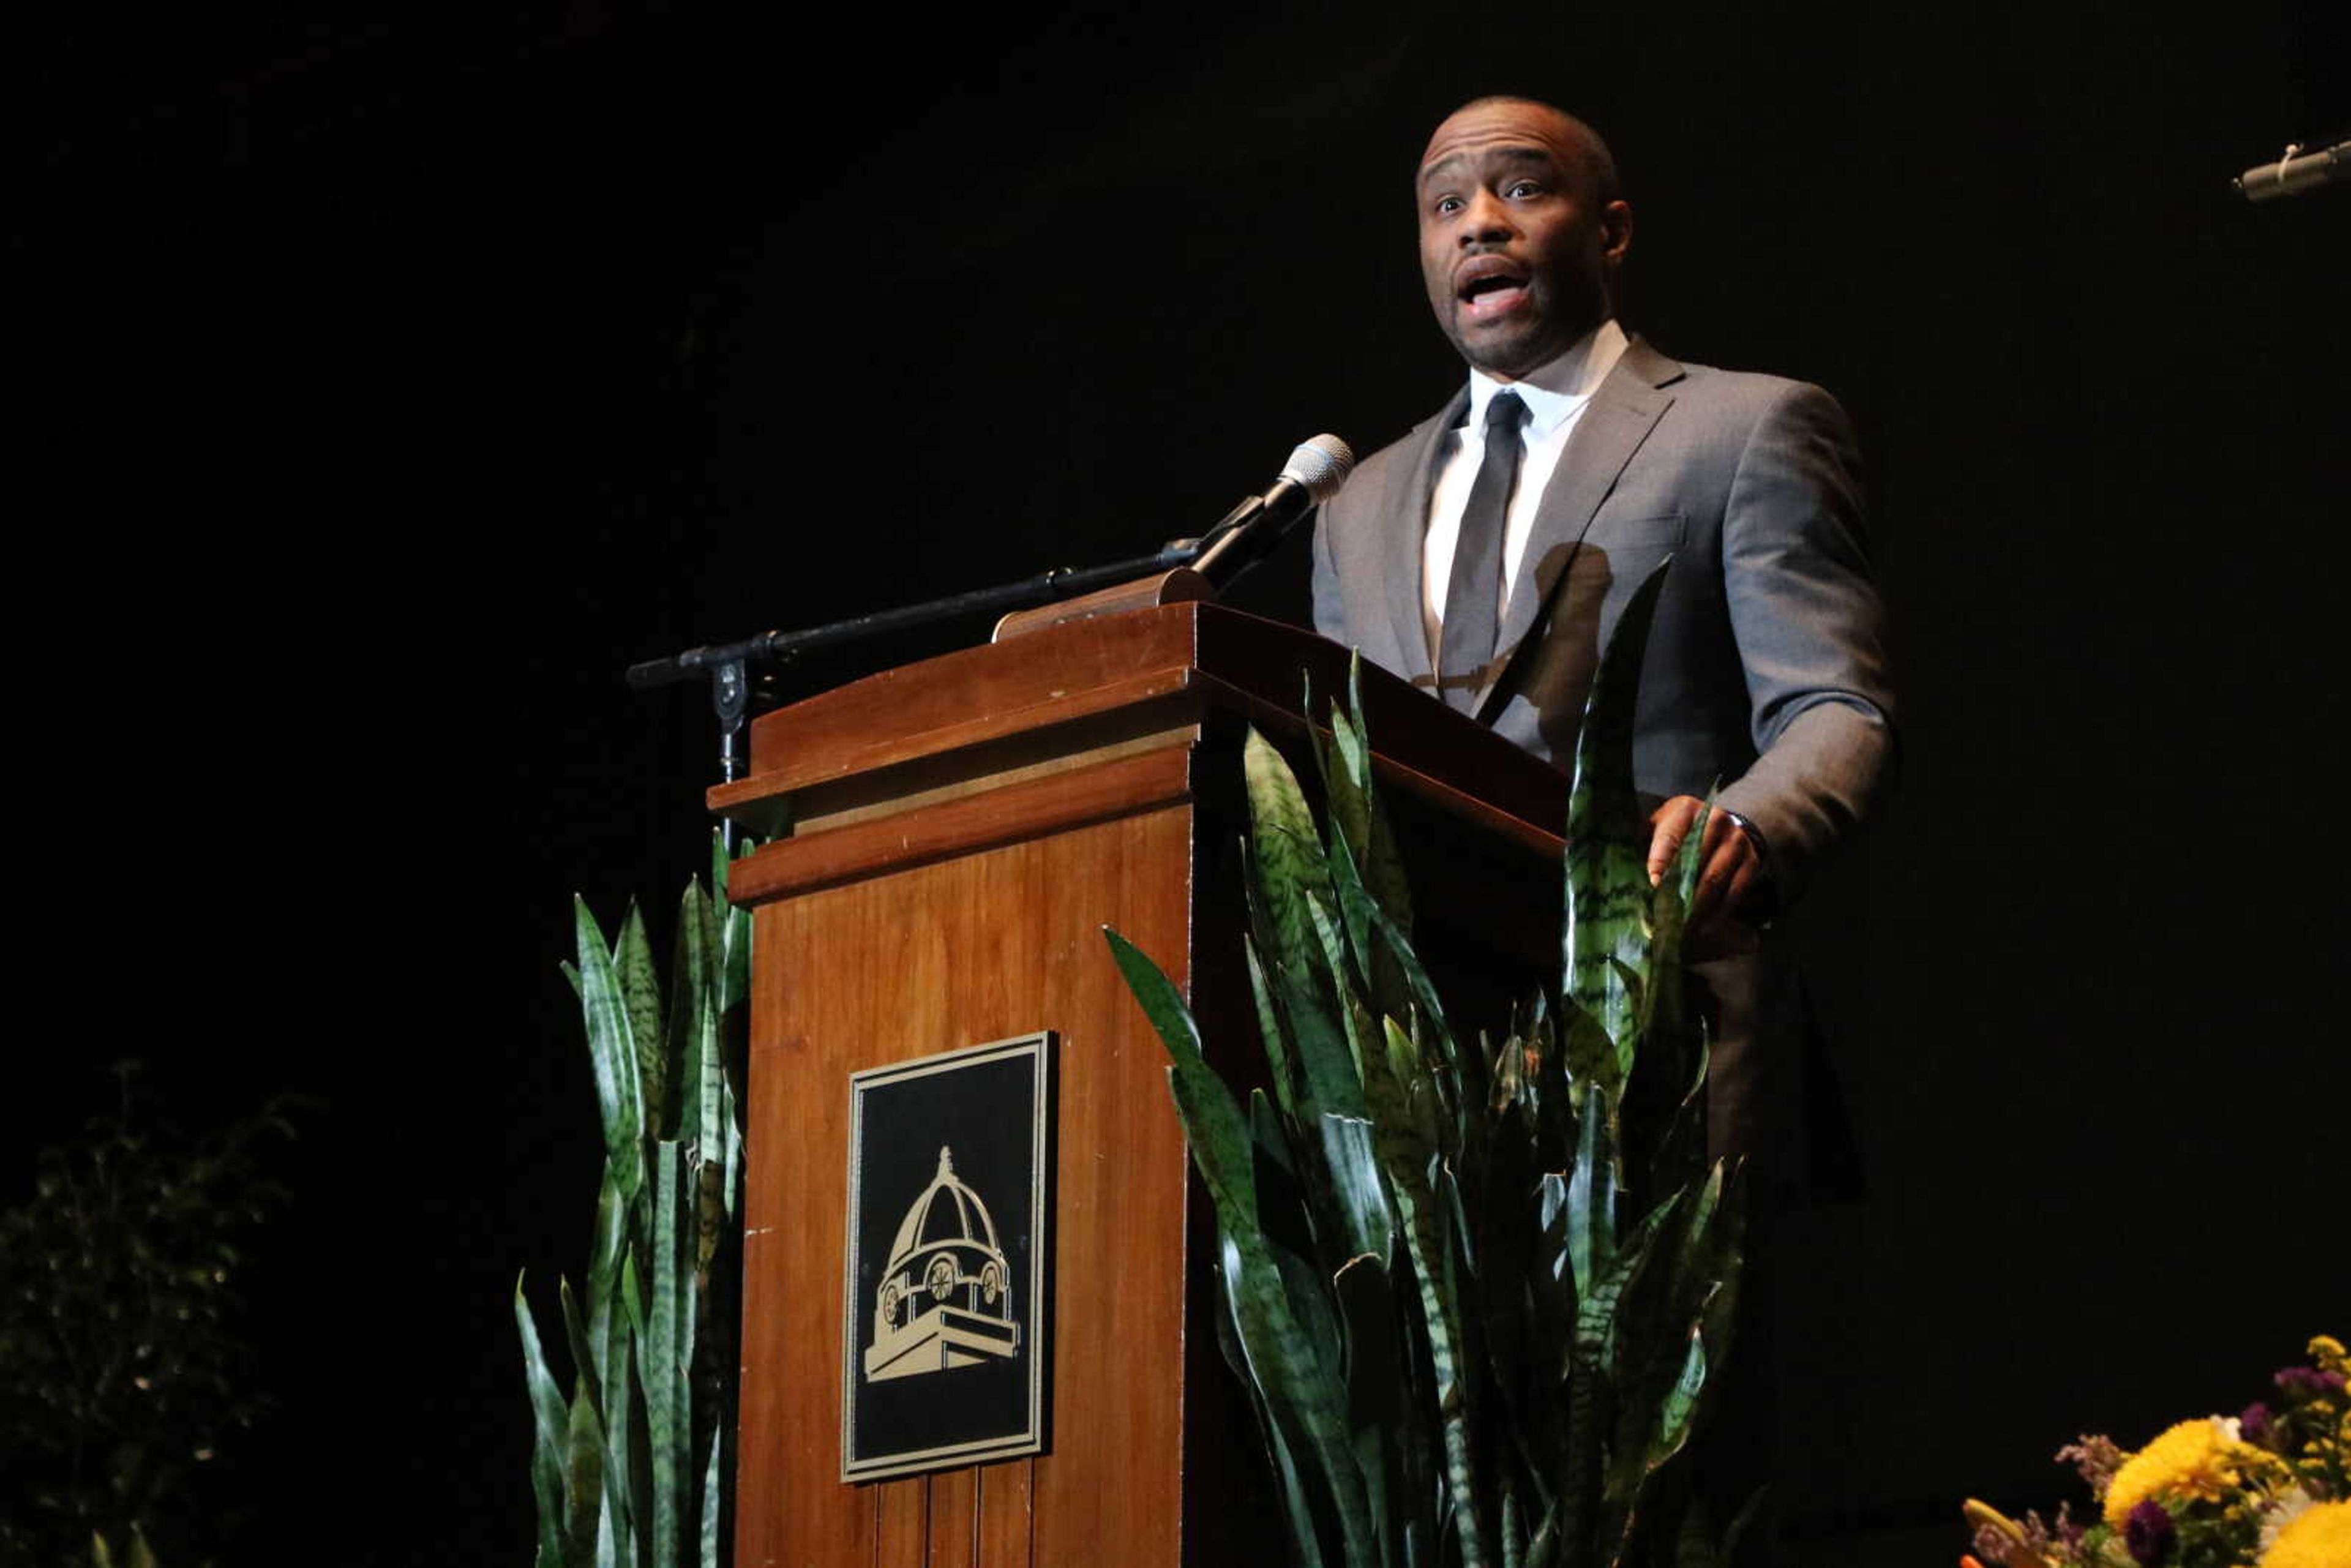 MLK speaker urges attendees to seek community in times of chaos